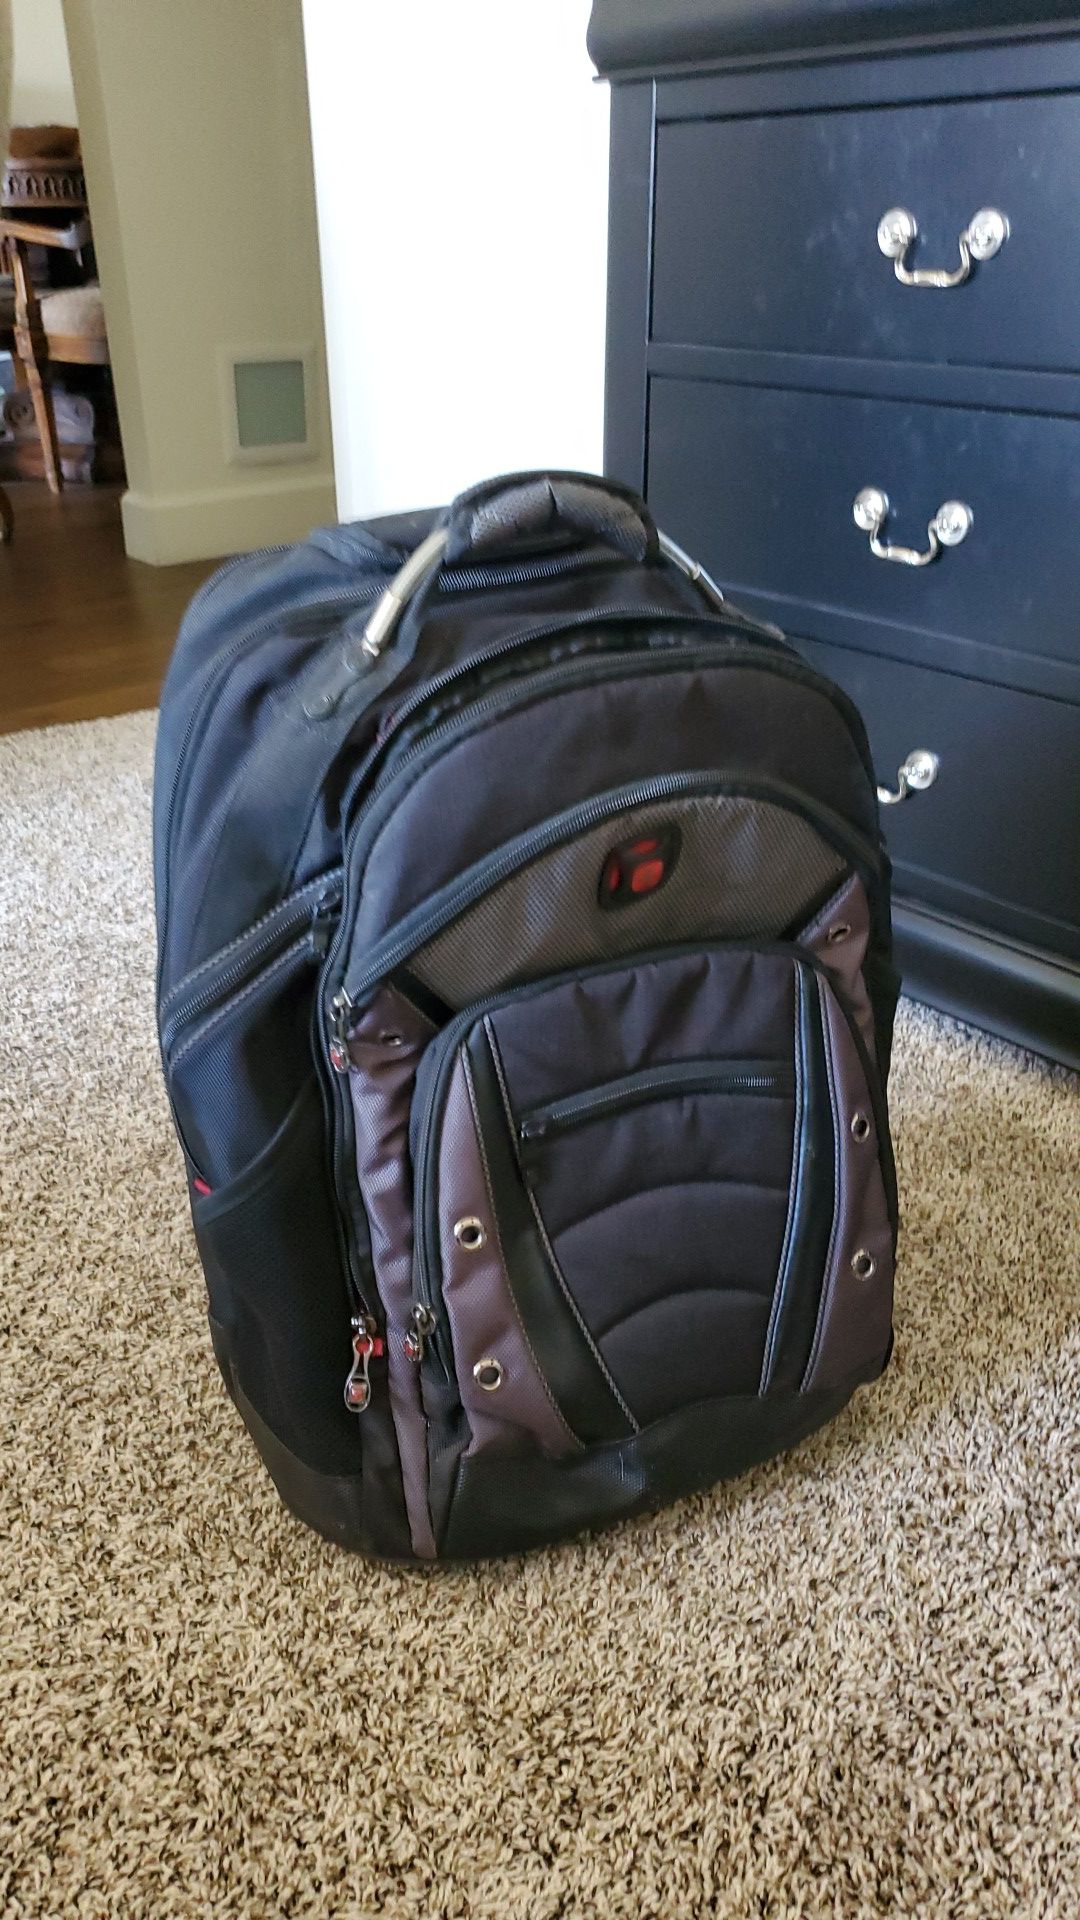 Brand new backpack traveling bag